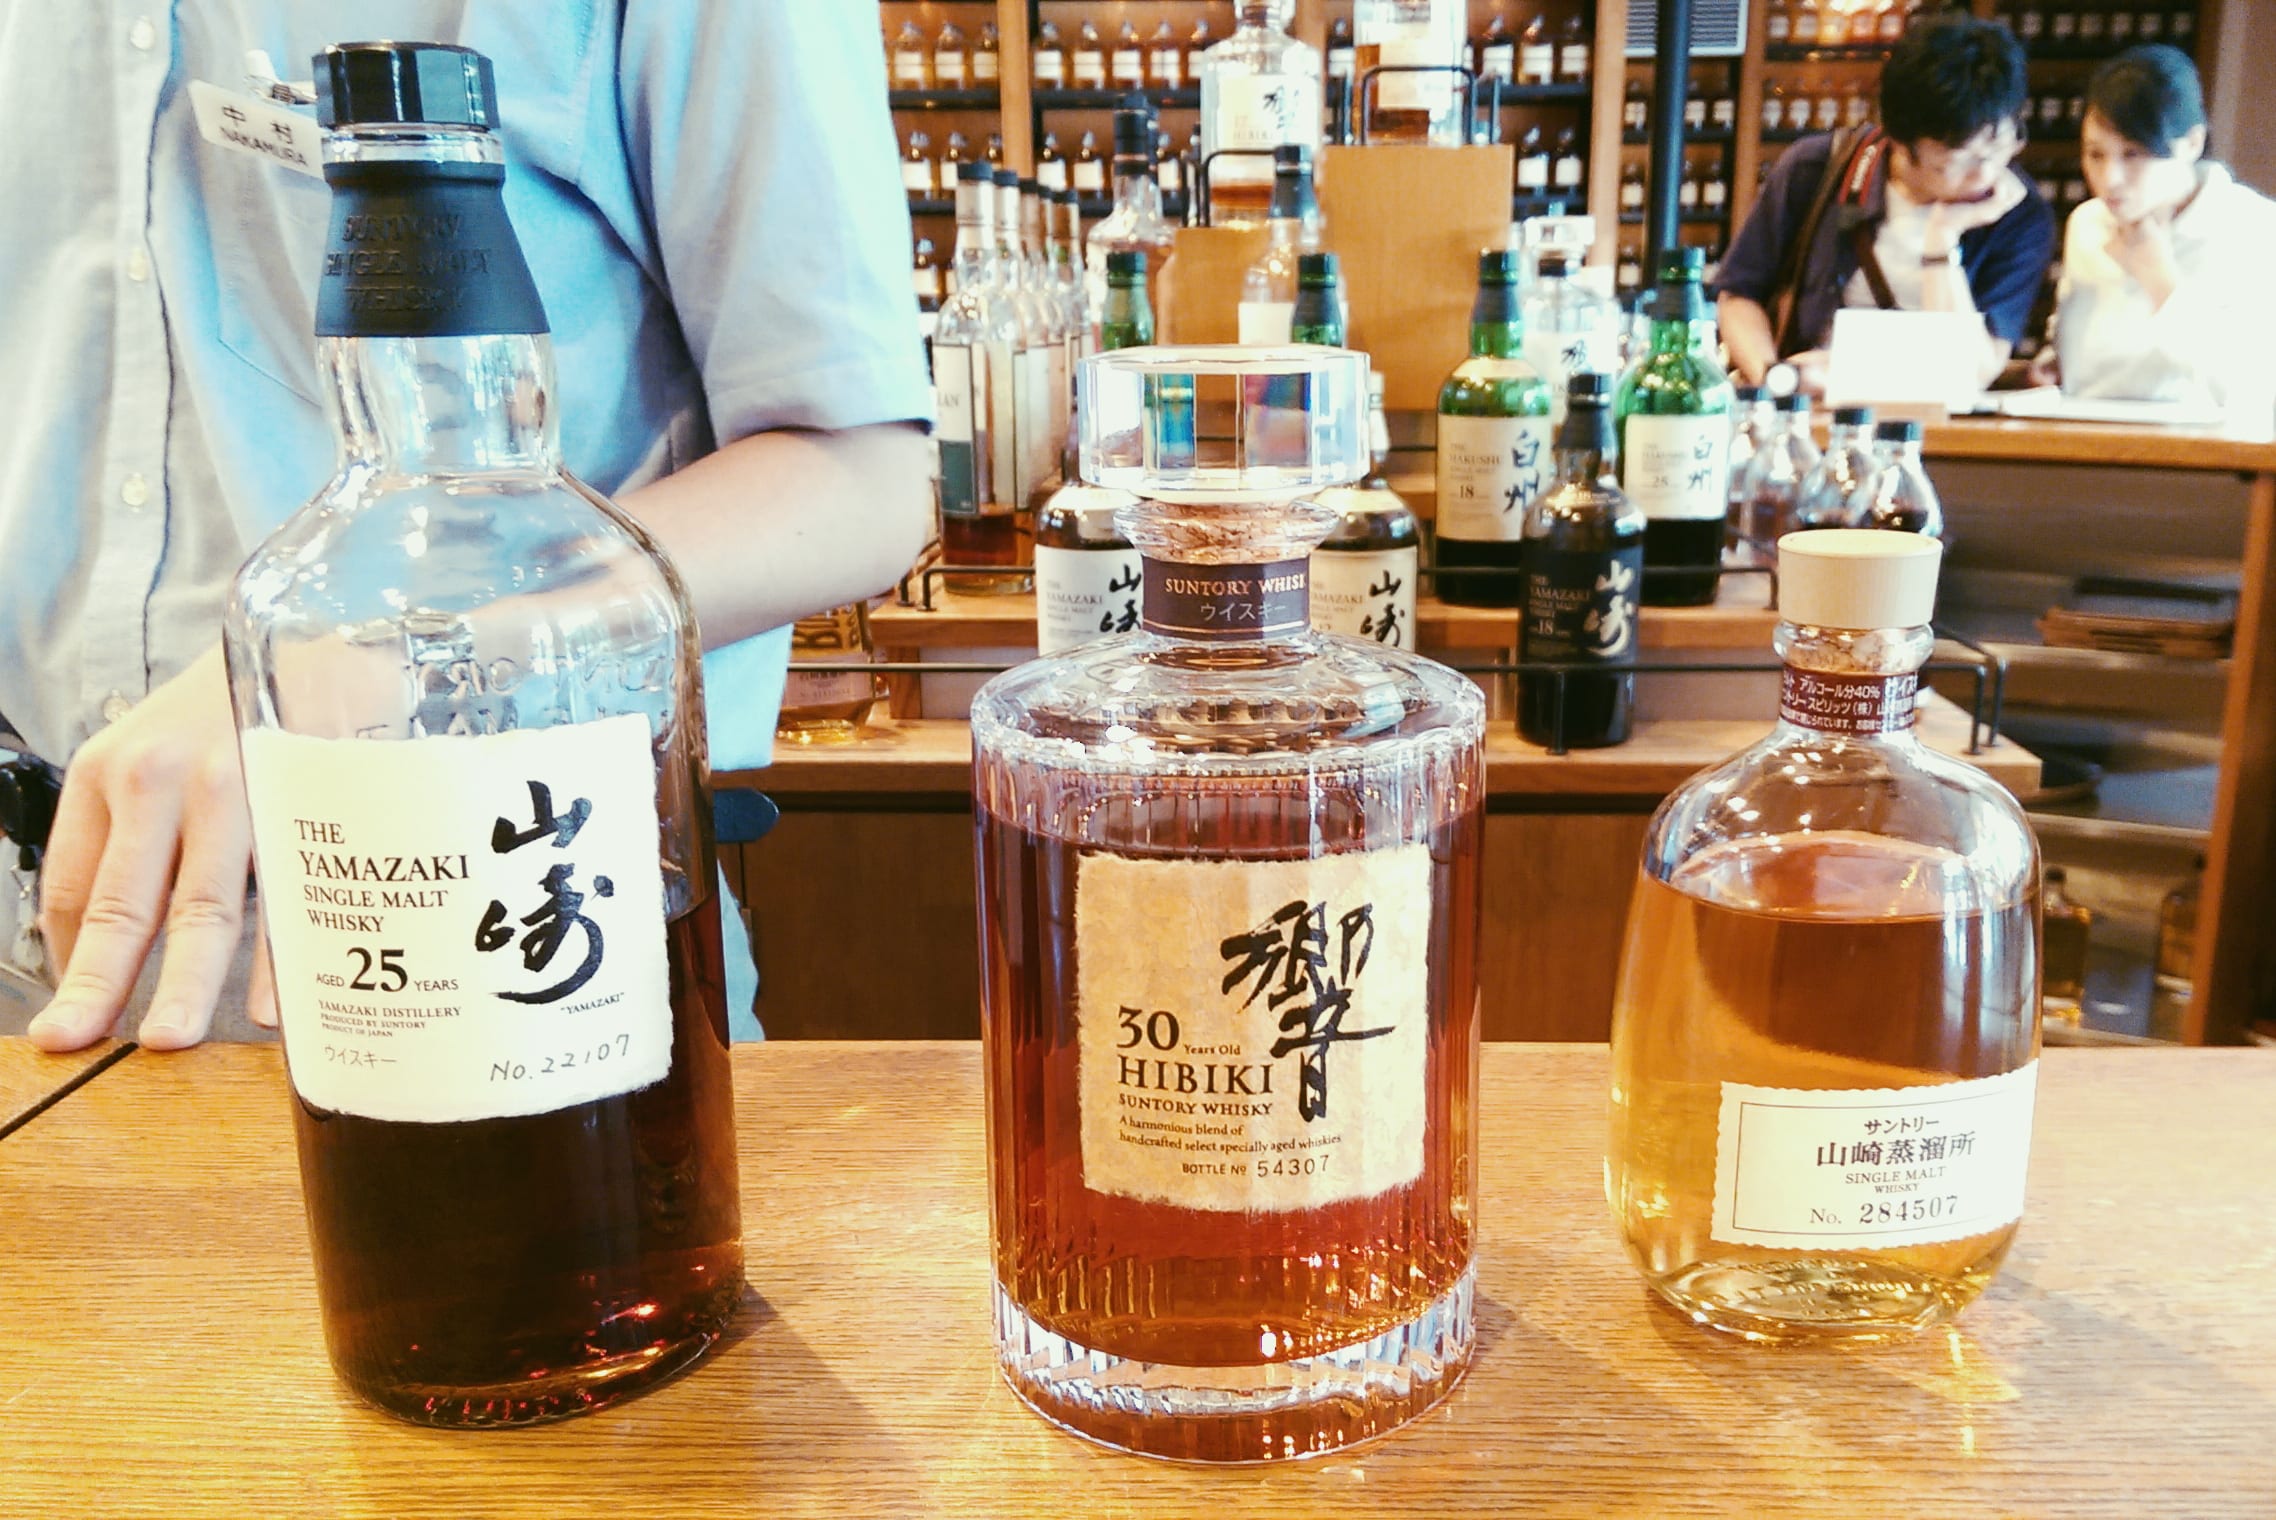 yamazaki whisky distillery tour